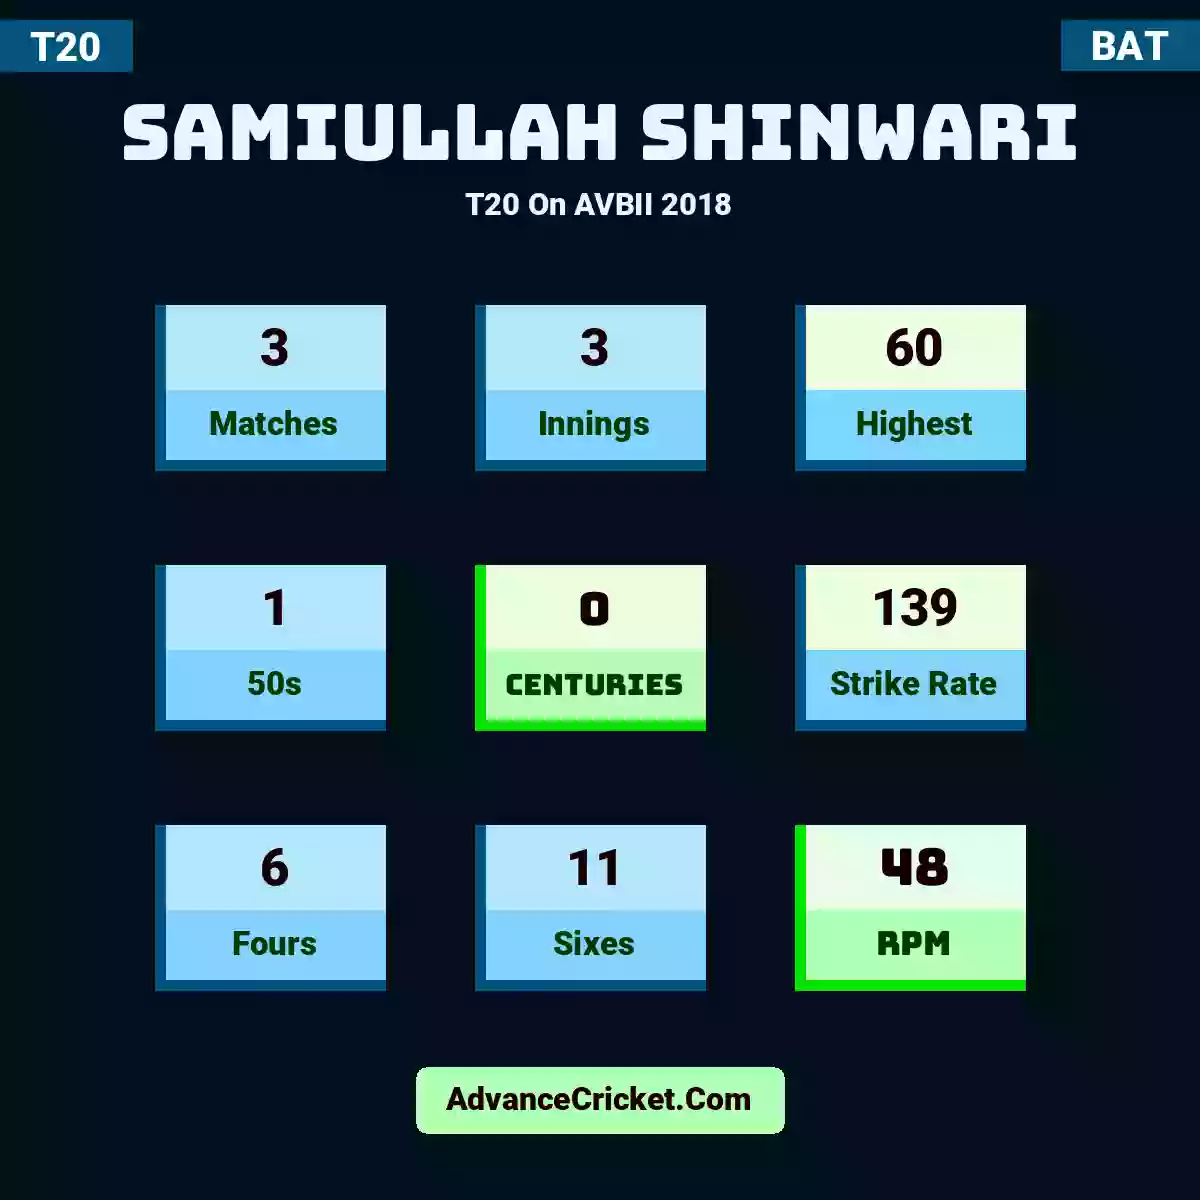 Samiullah Shinwari T20  On AVBII 2018, Samiullah Shinwari played 3 matches, scored 60 runs as highest, 1 half-centuries, and 0 centuries, with a strike rate of 139. S.Shinwari hit 6 fours and 11 sixes, with an RPM of 48.